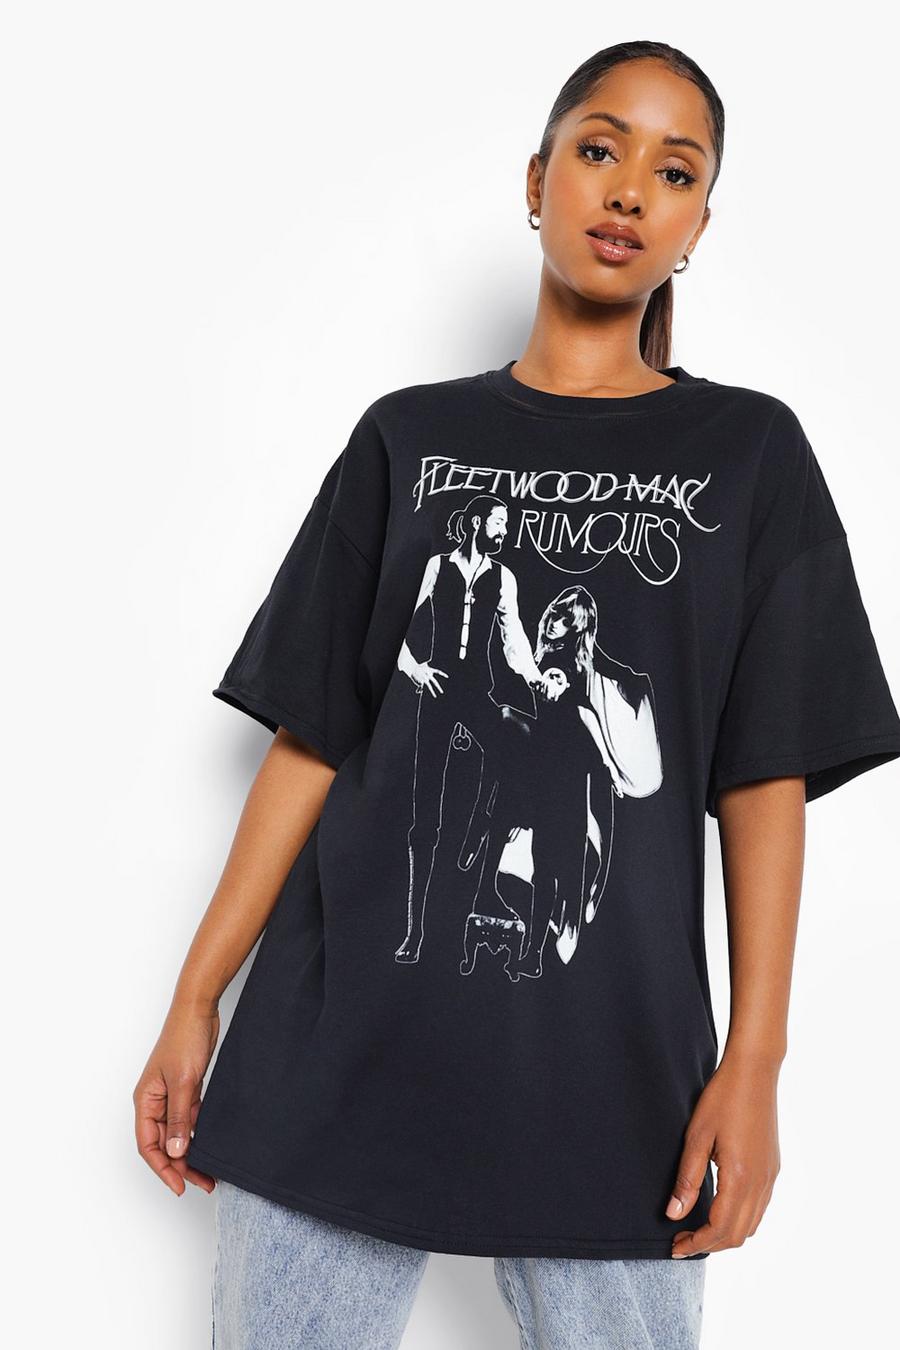 T-shirt Premaman ufficiale Fleetwood Mac, Black